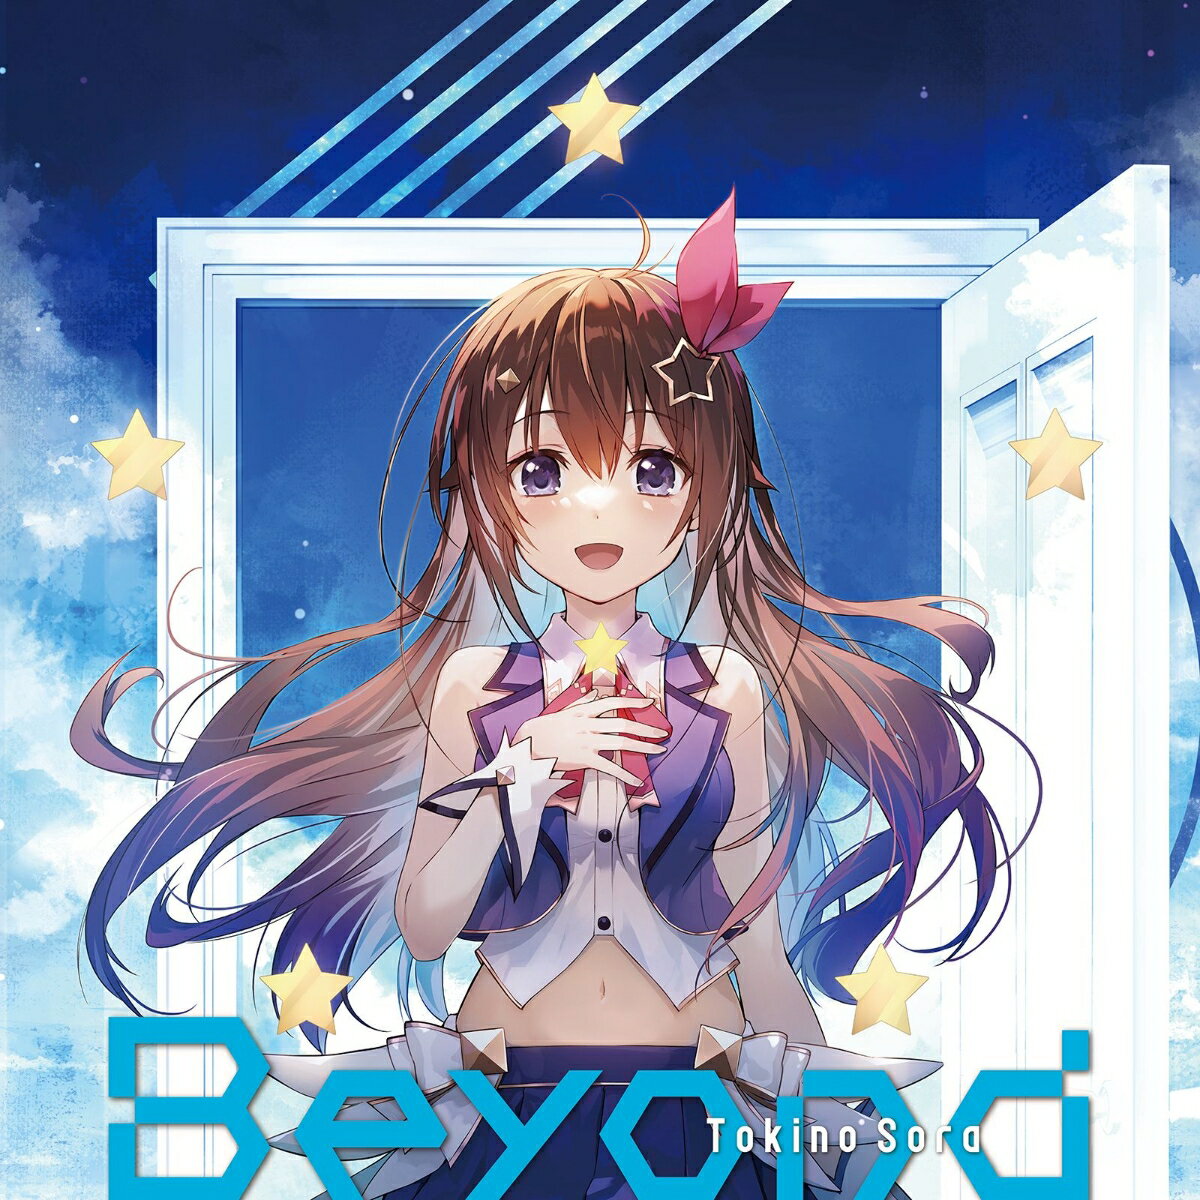 Beyond [ ときのそら ]